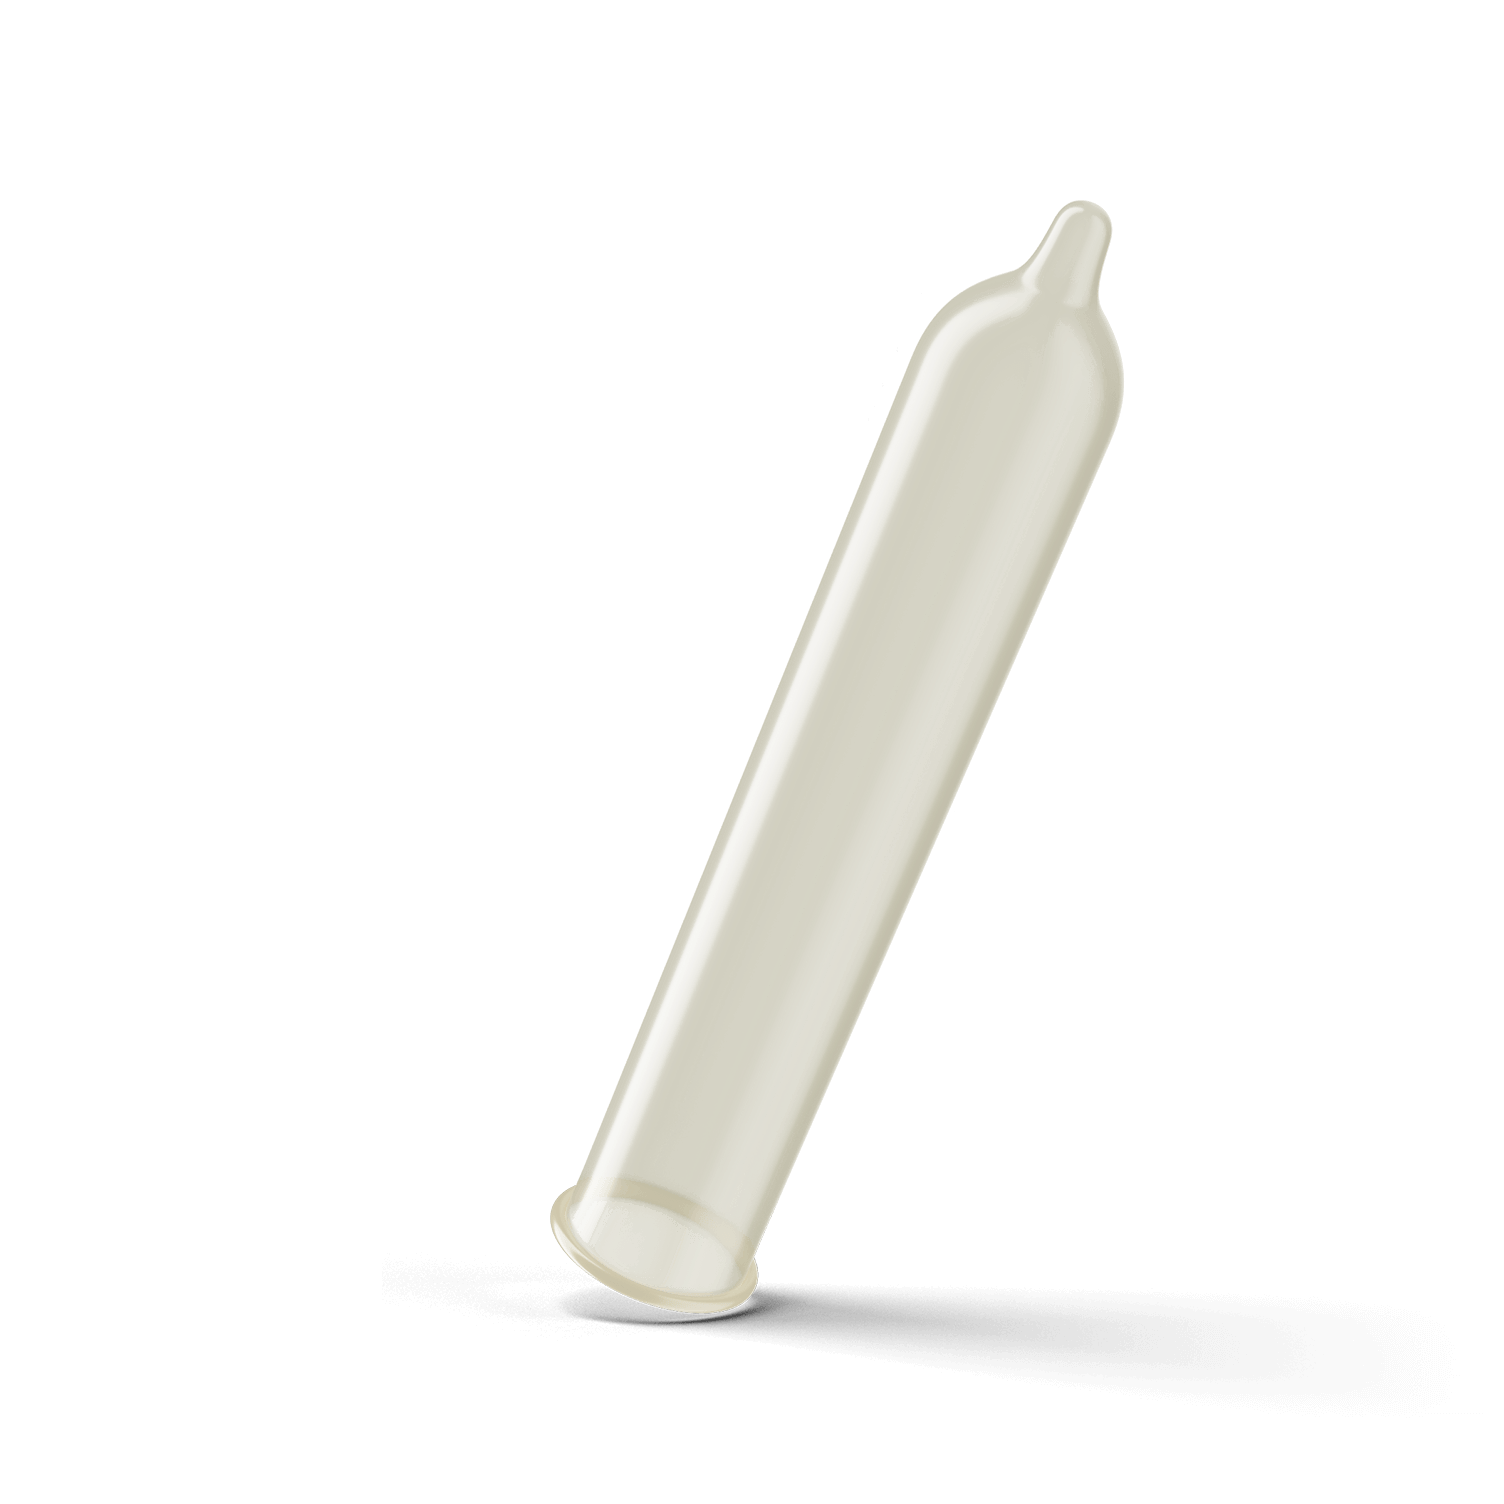 Trojan ENZ straight shape condom with reservoir tip.